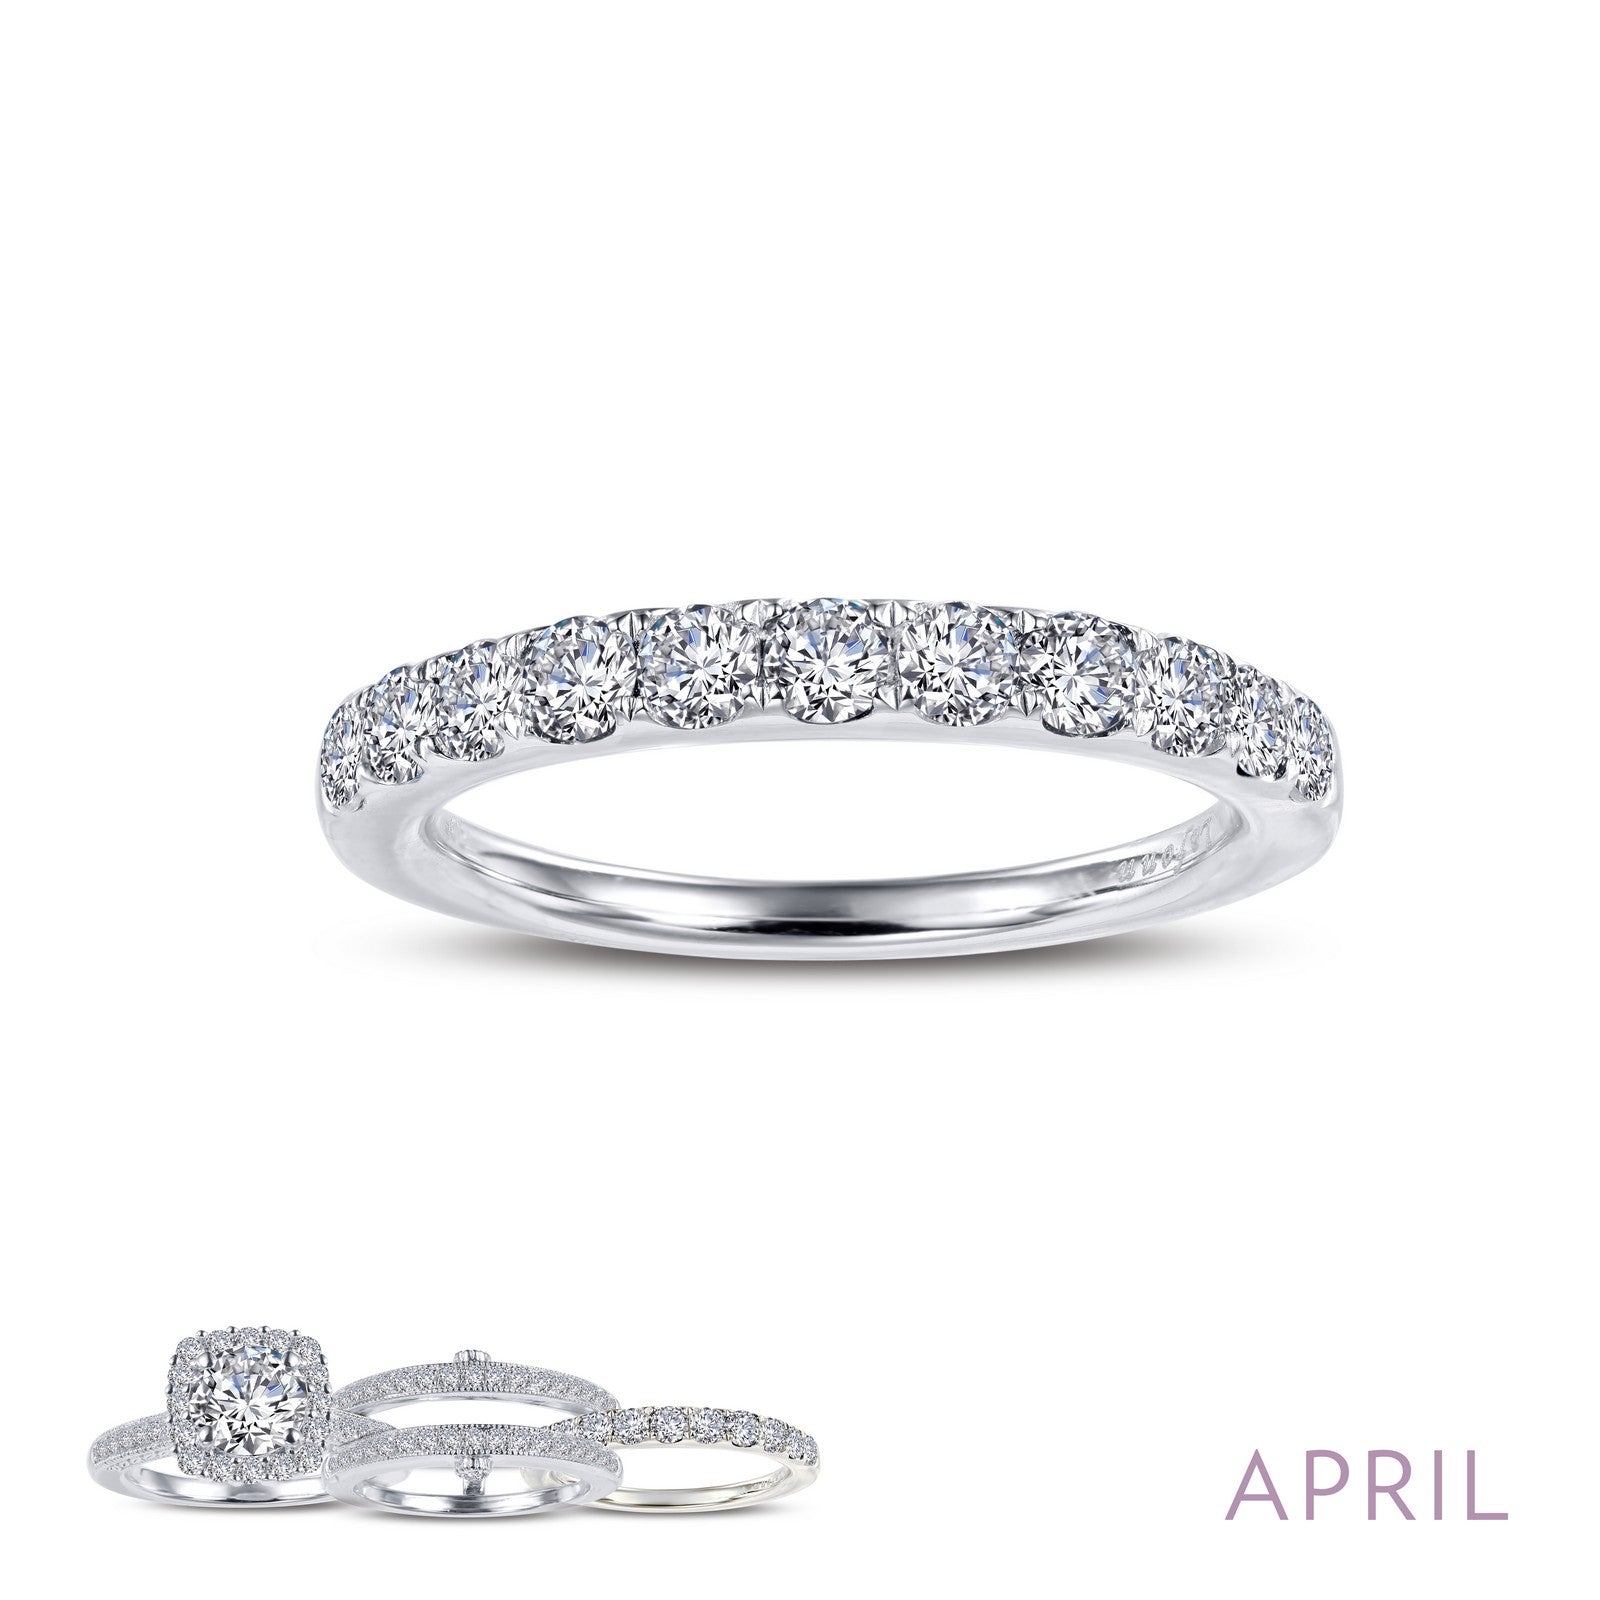 April Birthstone Ring